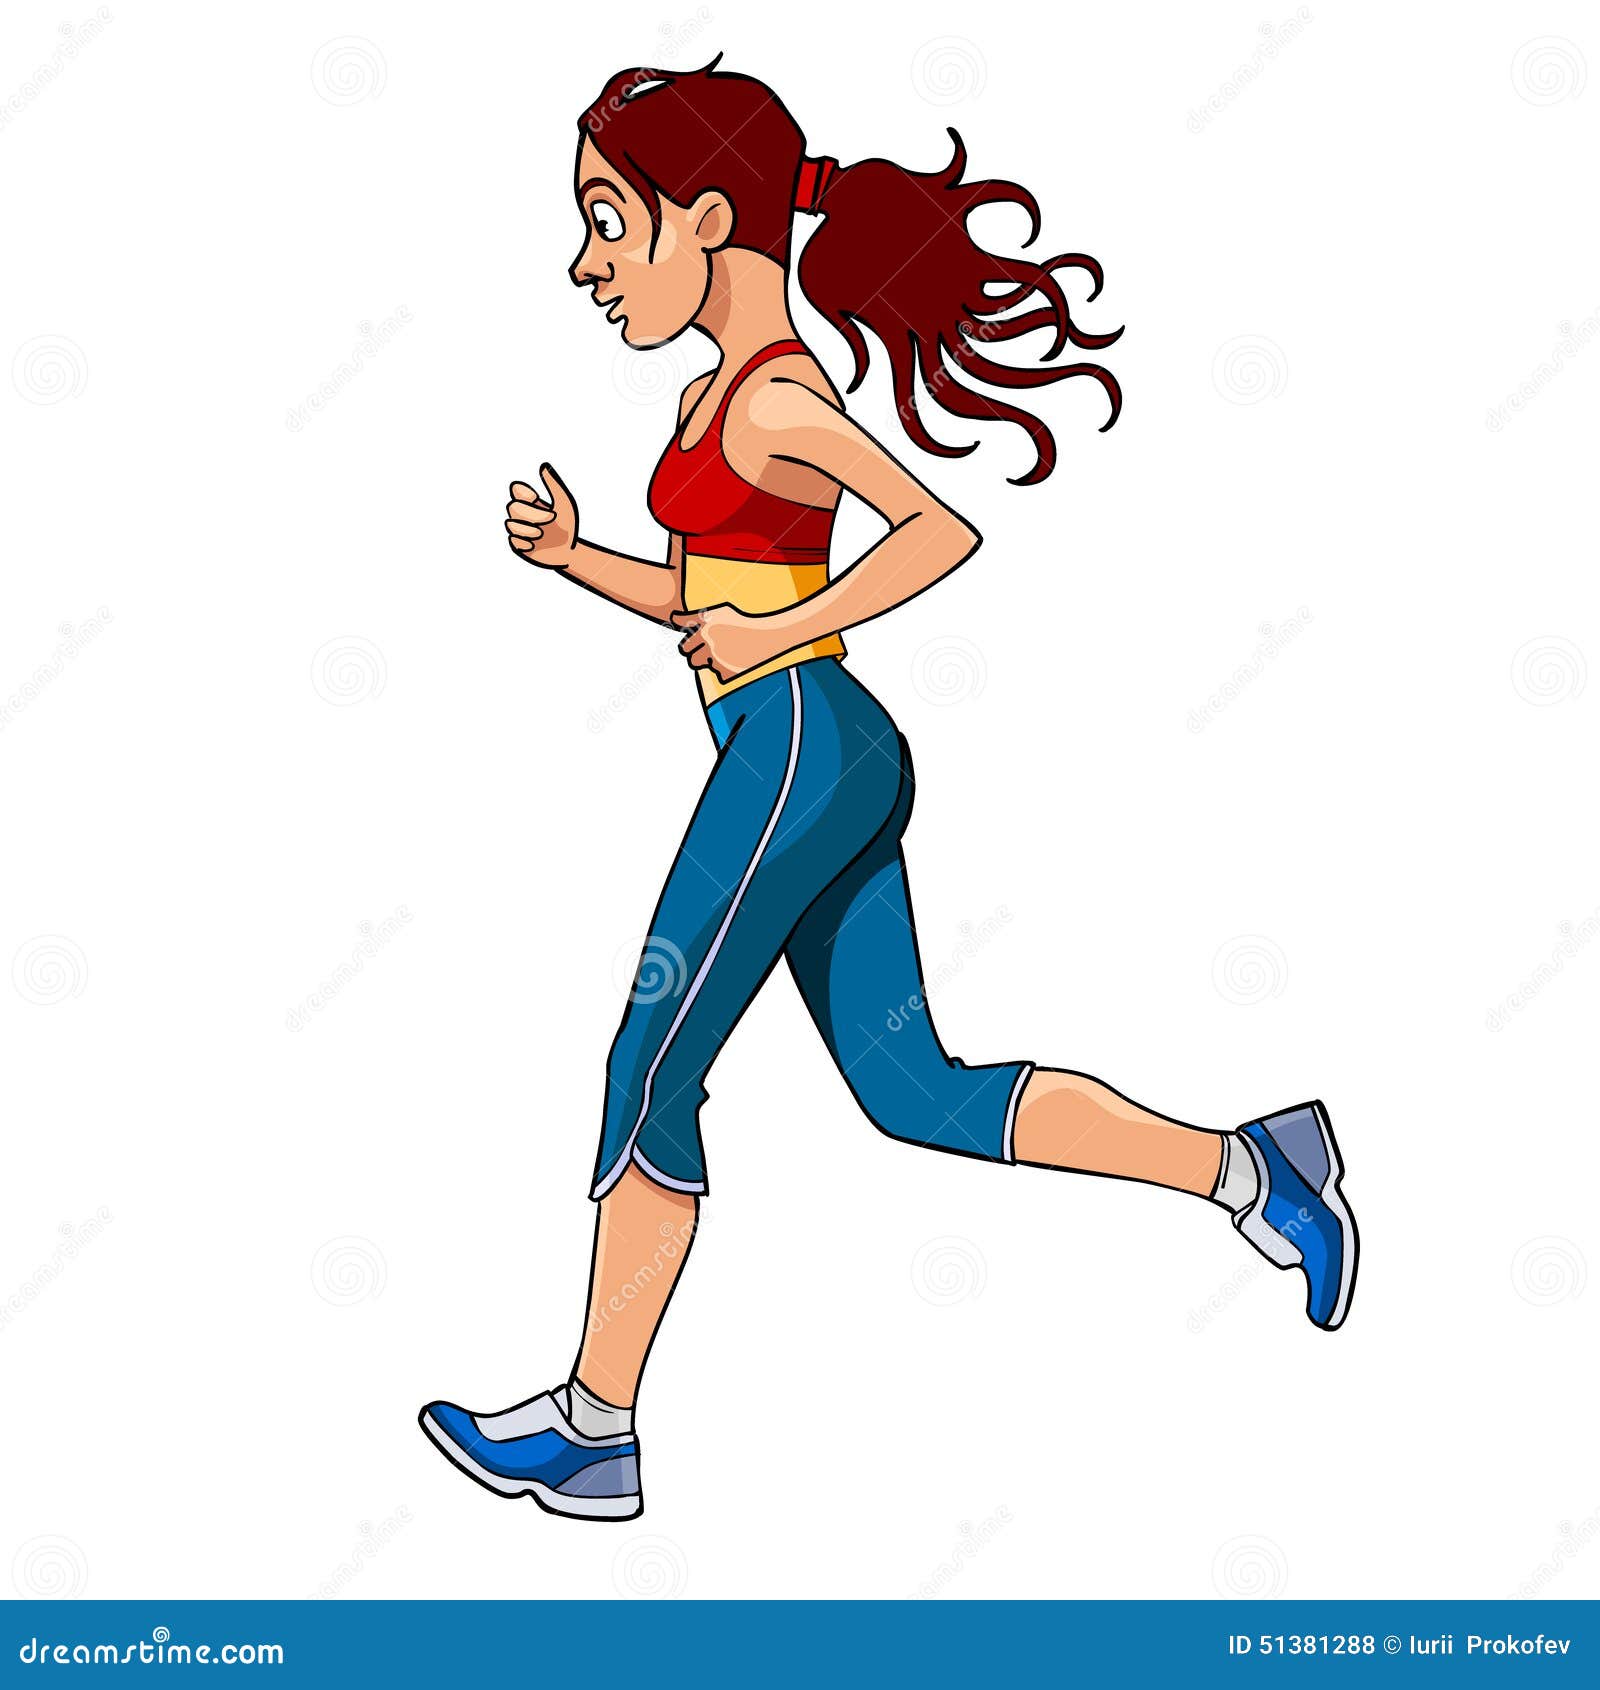 clipart girl jogging - photo #35